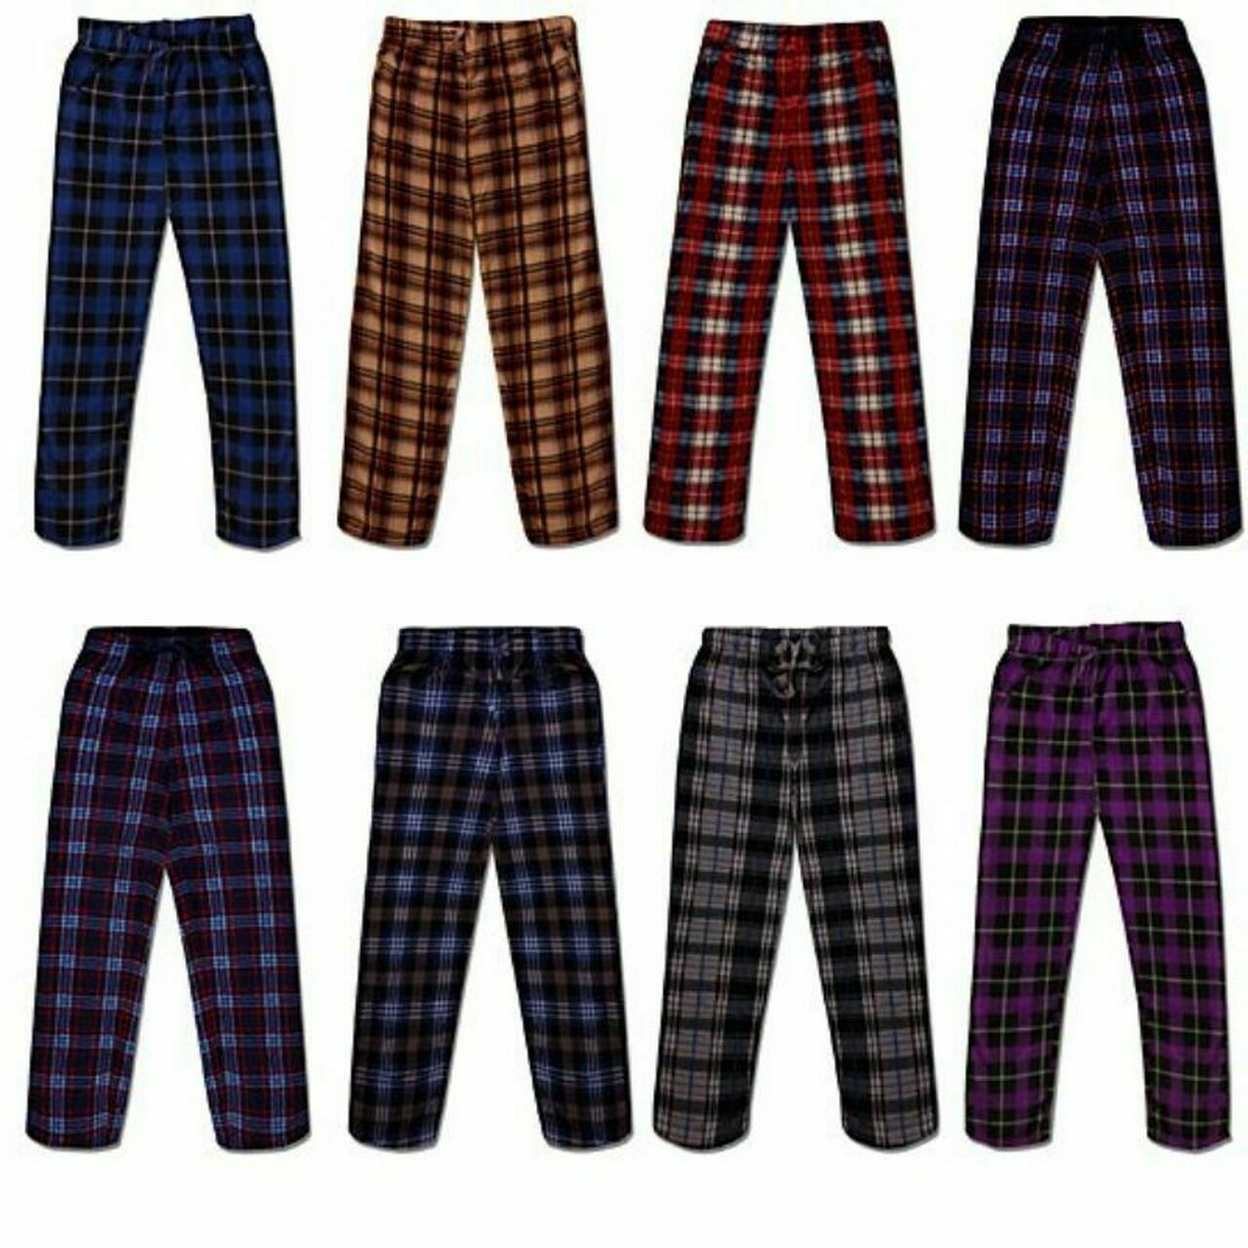 2-Pack: Men's Ultra Soft Cozy Flannel Fleece Plaid Pajama Sleep Bottom Lounge Pants - Black & Blue, X-large